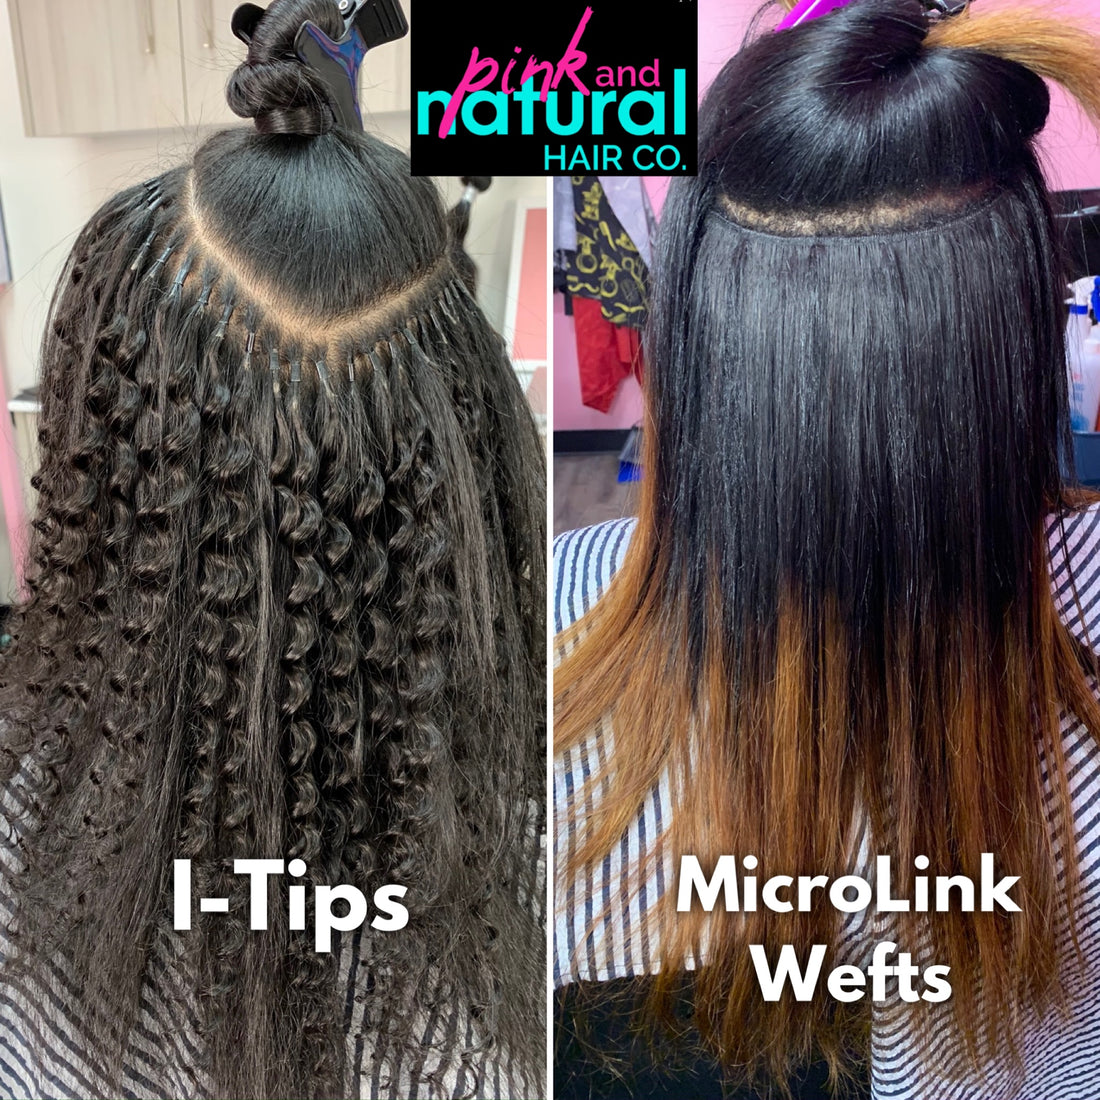 I-Tips vs MicroLinks - Textured Hair Talk